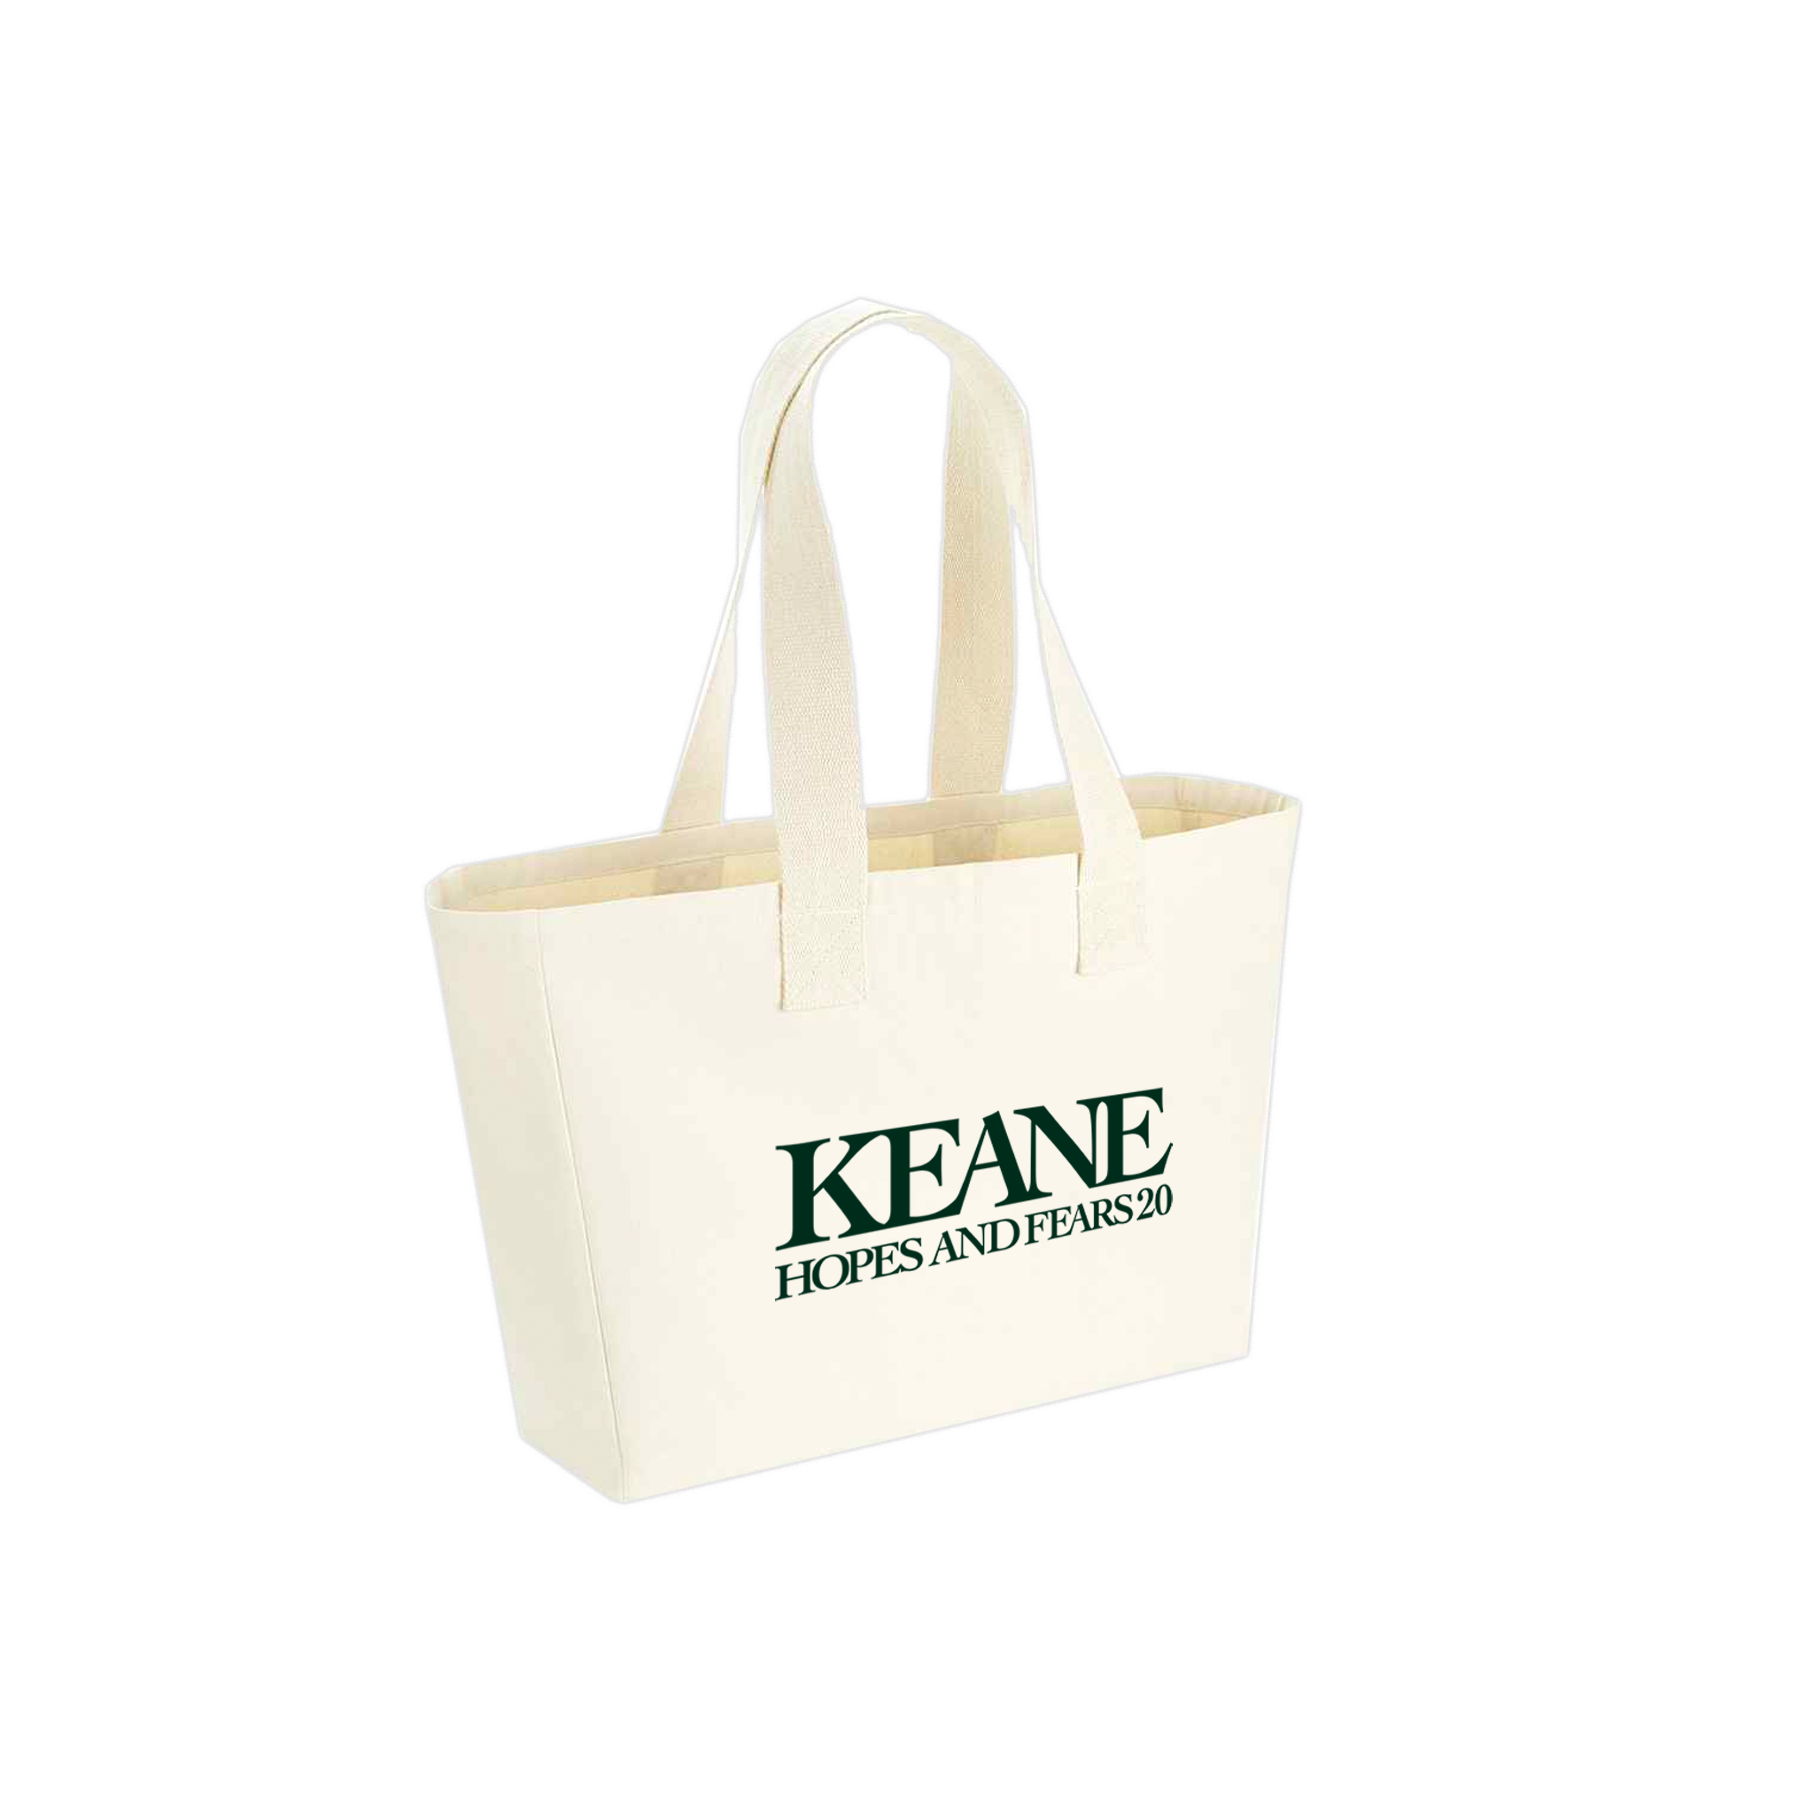 Hopes And Fears 20 Shopper Keane